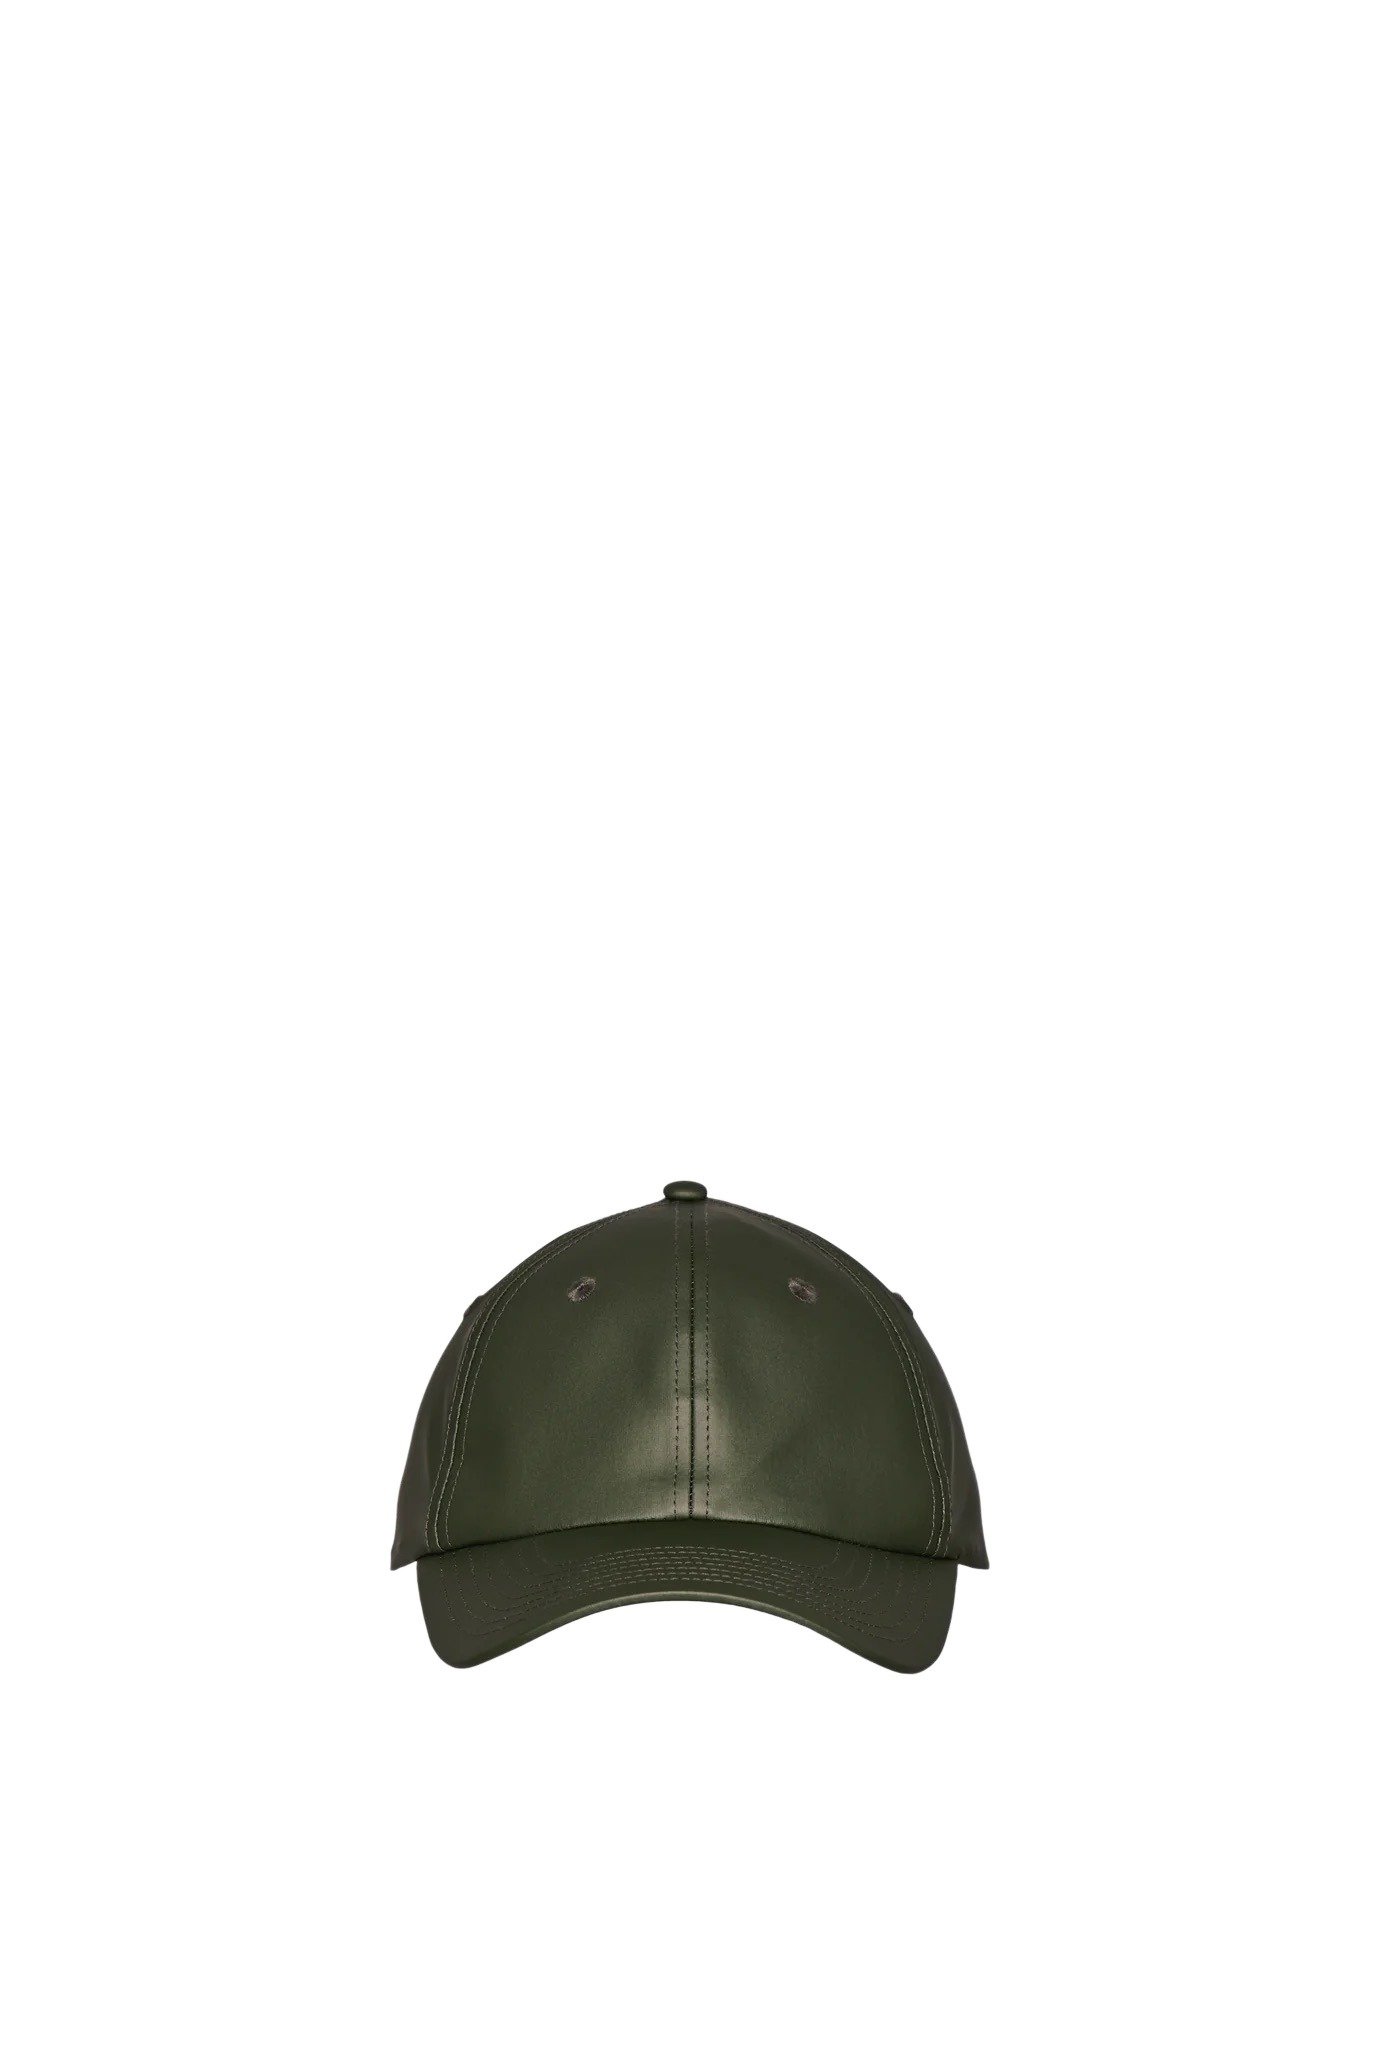 cap-headwear-13600-65_evergreen-23